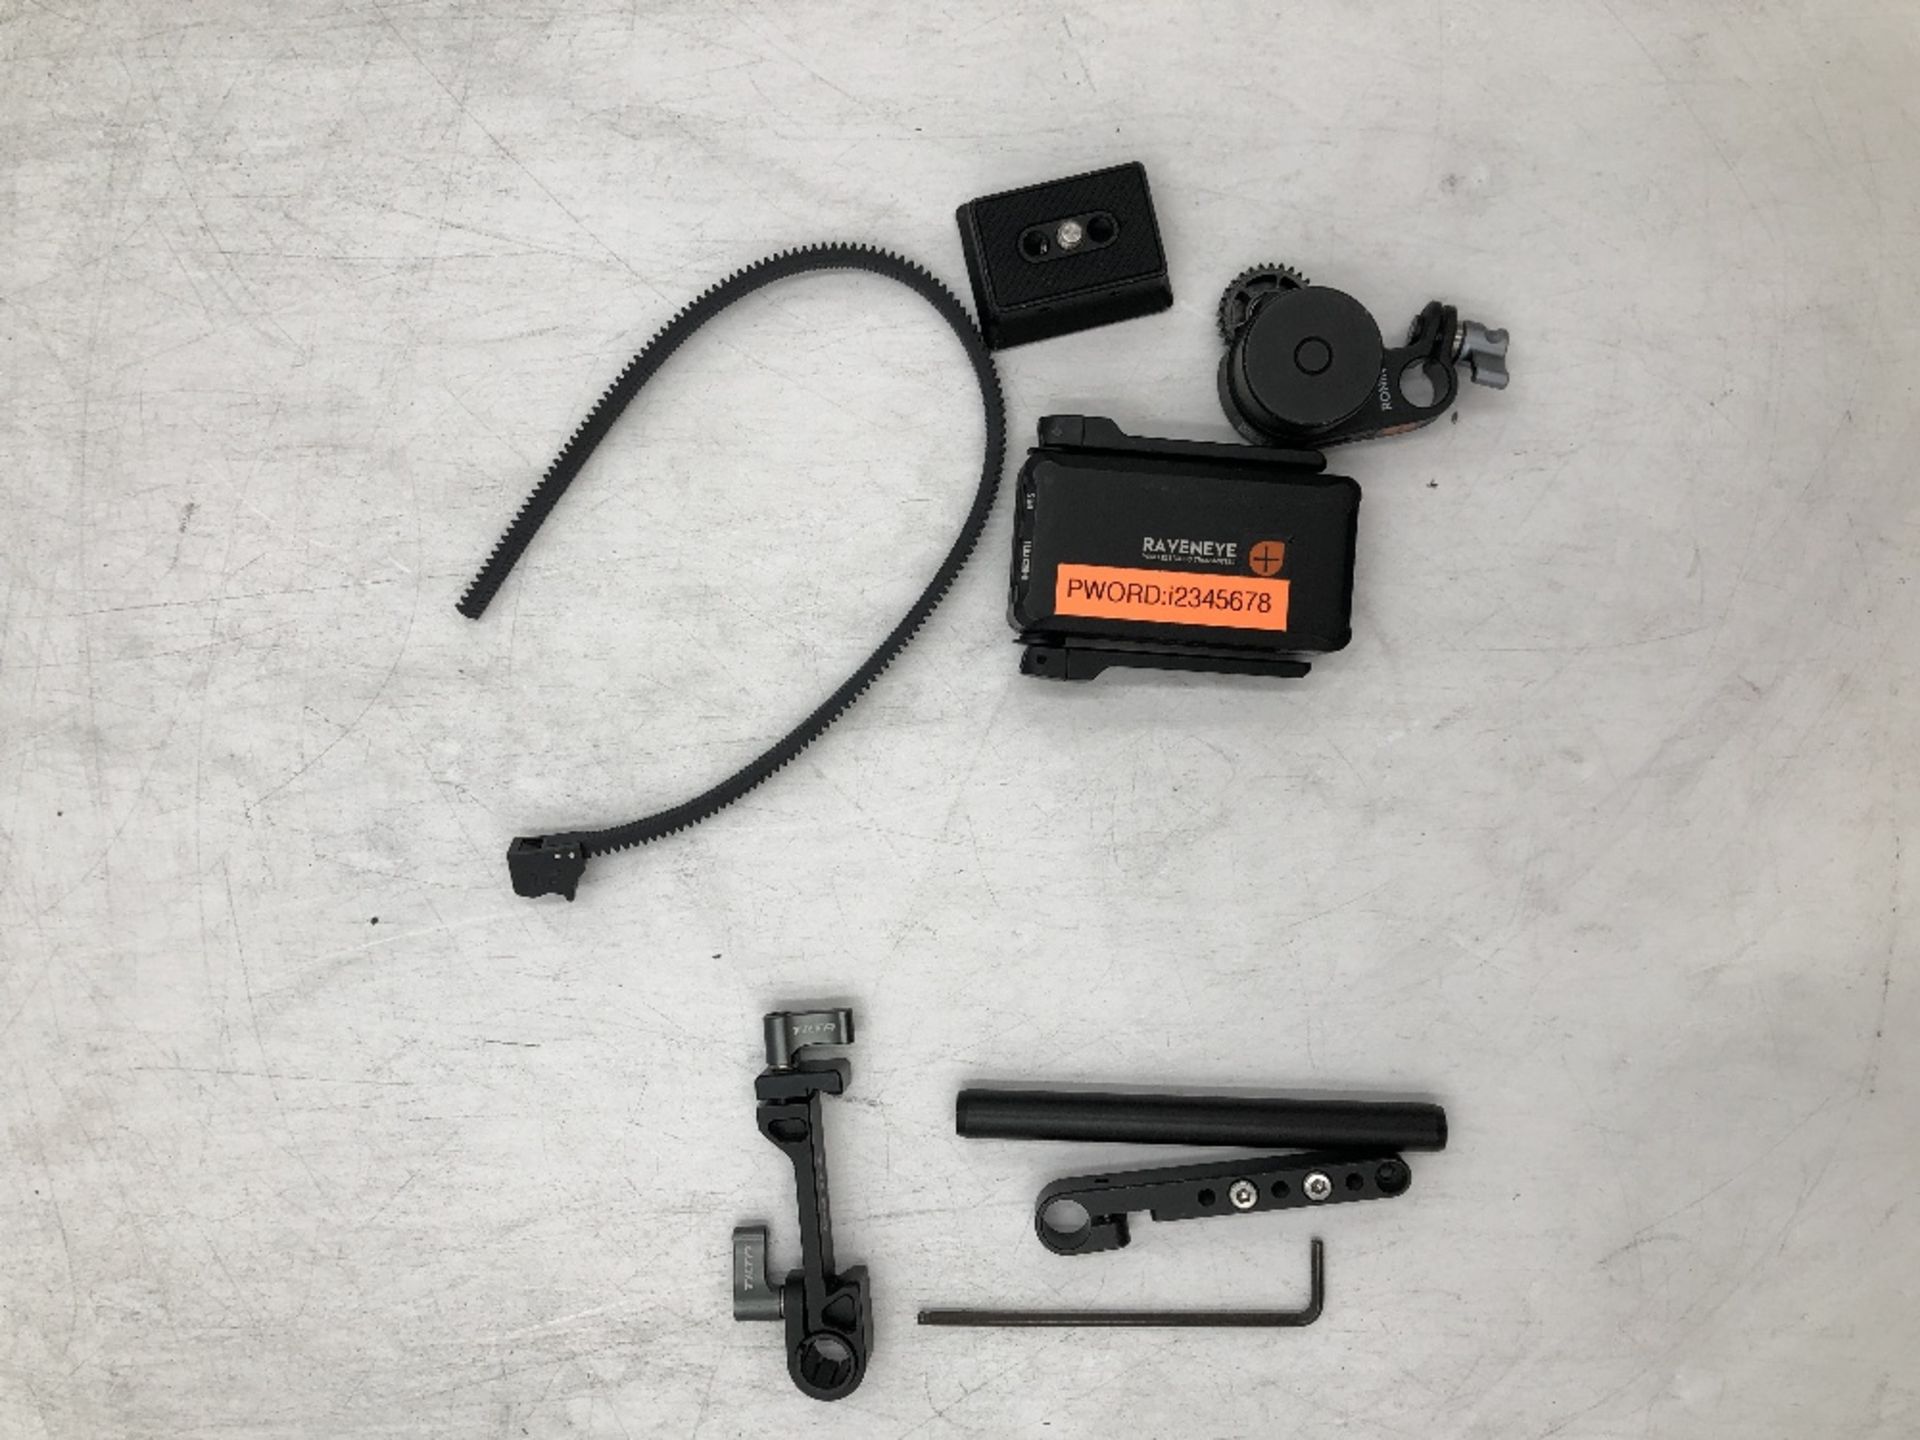 DJI RS 2 Gimbal 3-axis camera Stabiliser Kit for DSLR Cameras - Image 3 of 5